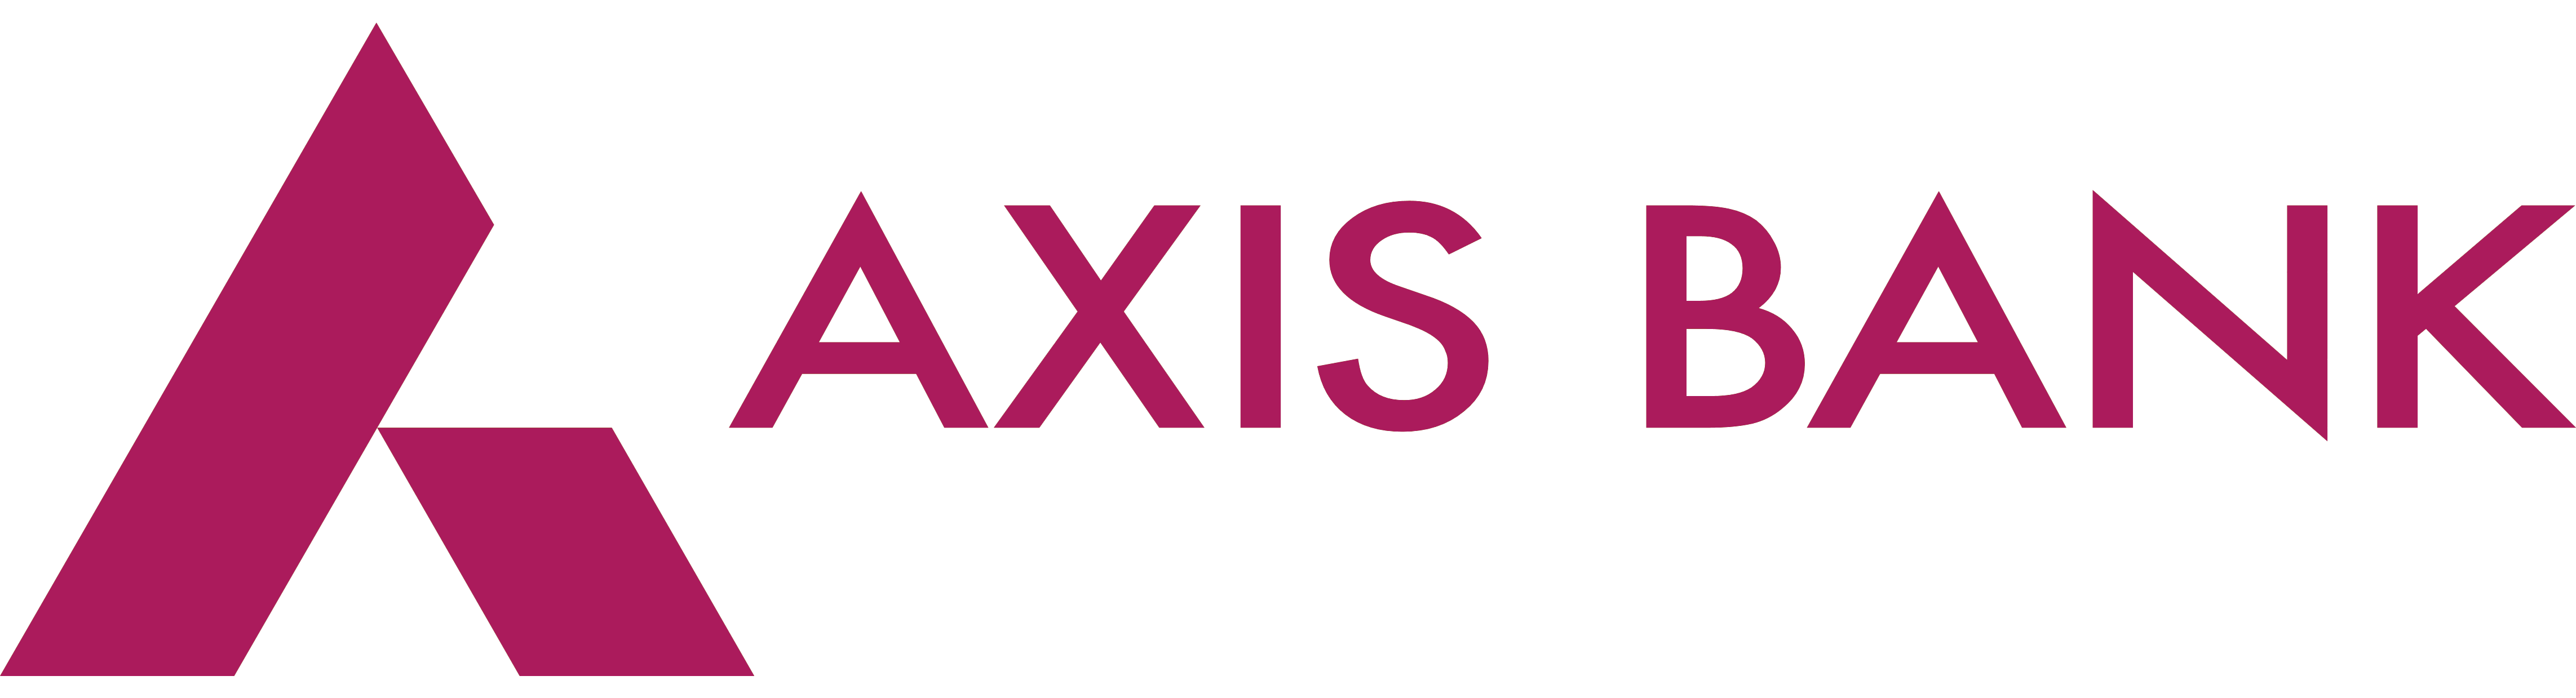 Axis_Bank_logo_logotype